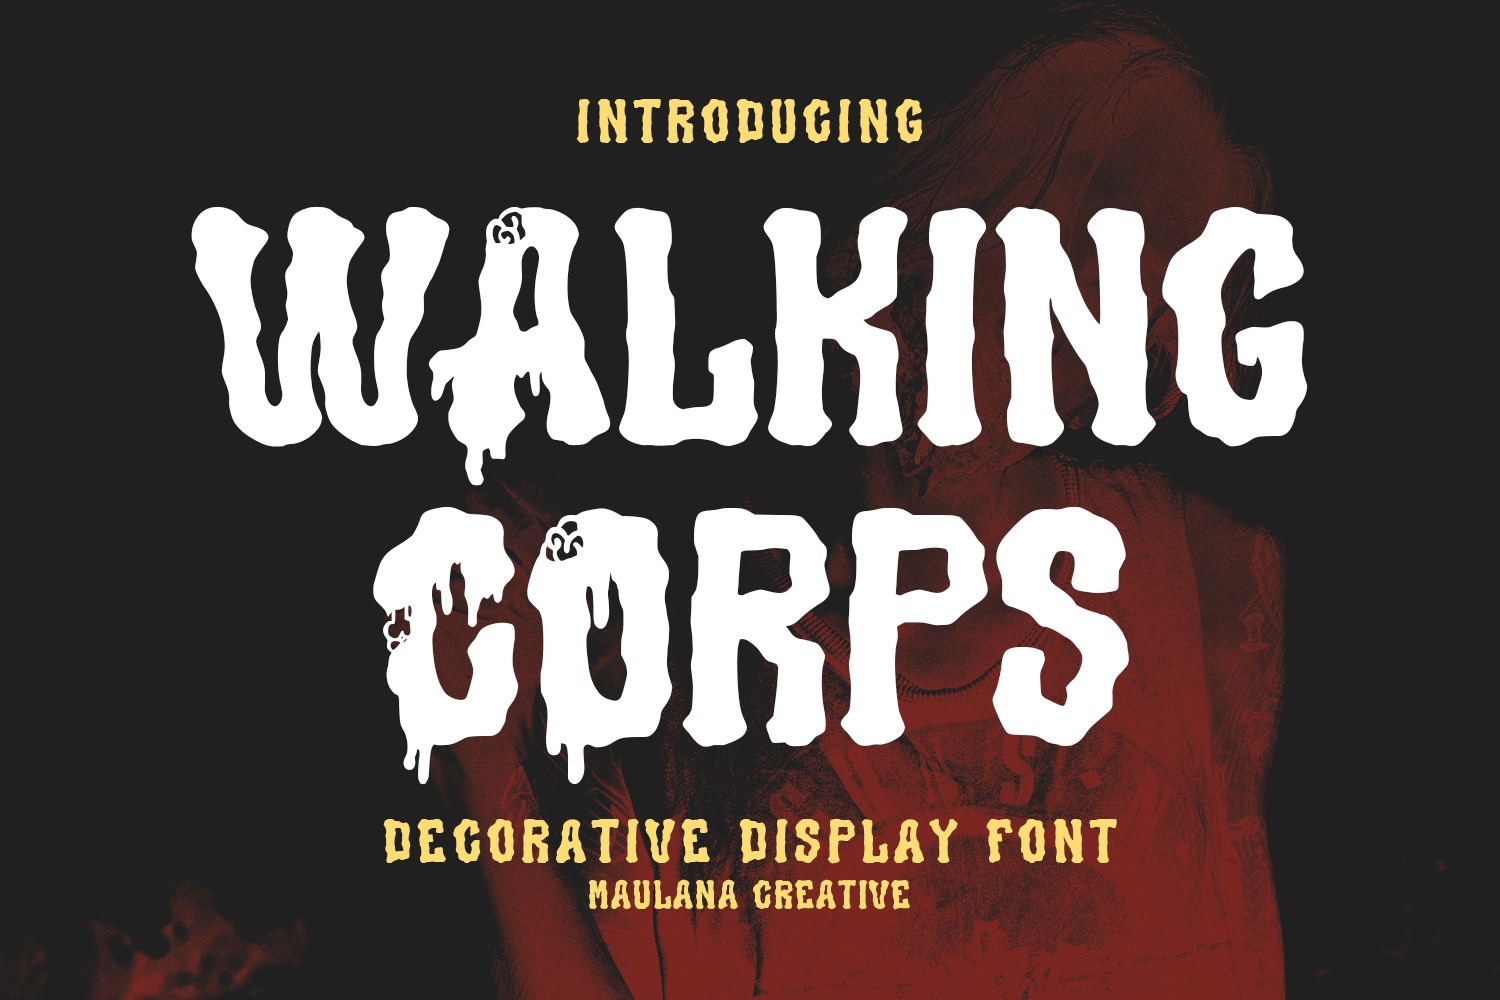 Walking Corps